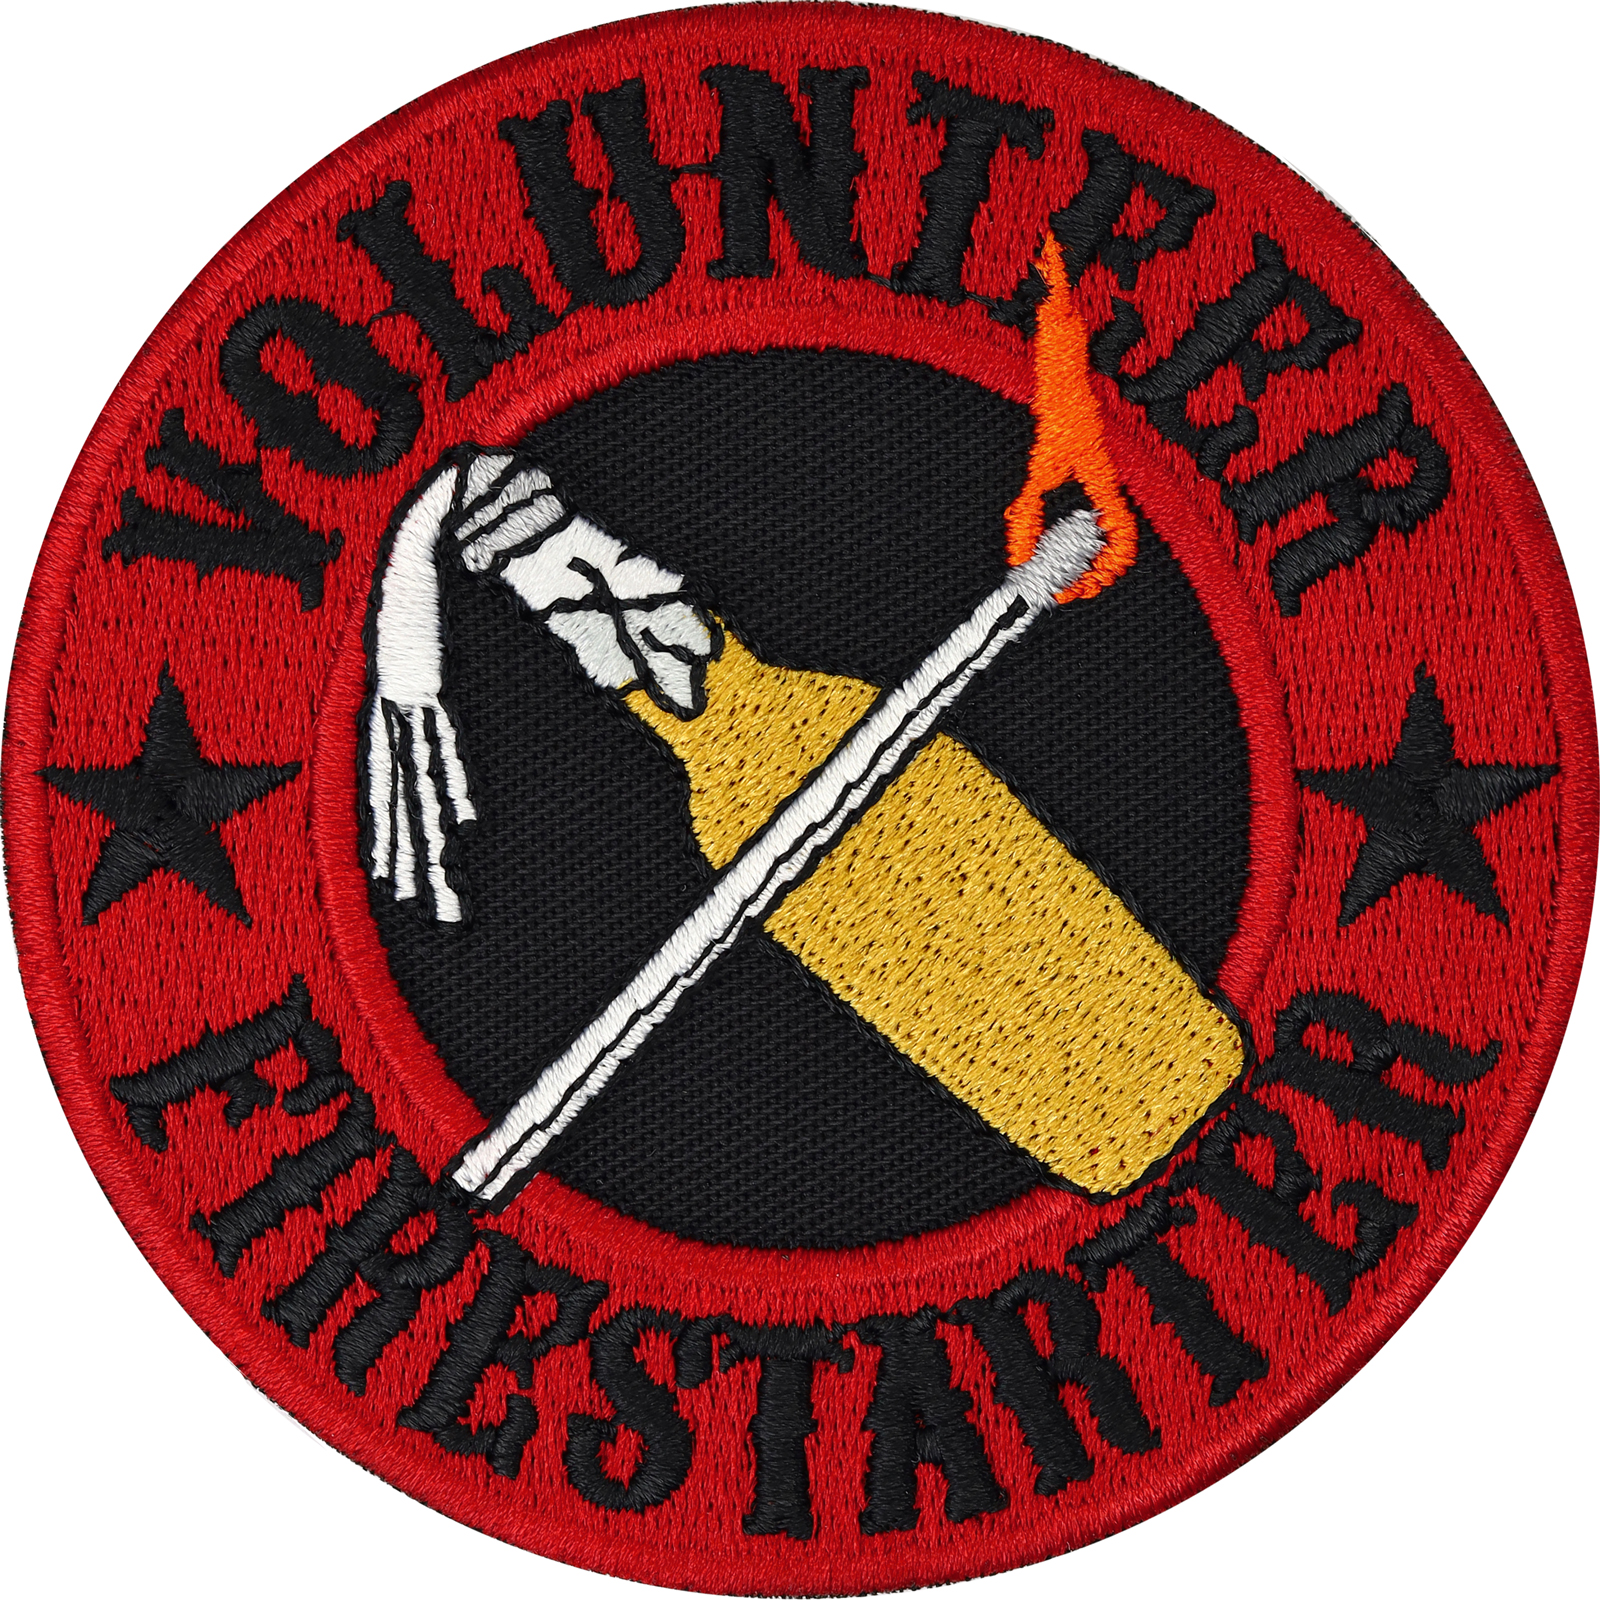 Volunteer firestarter - Patch